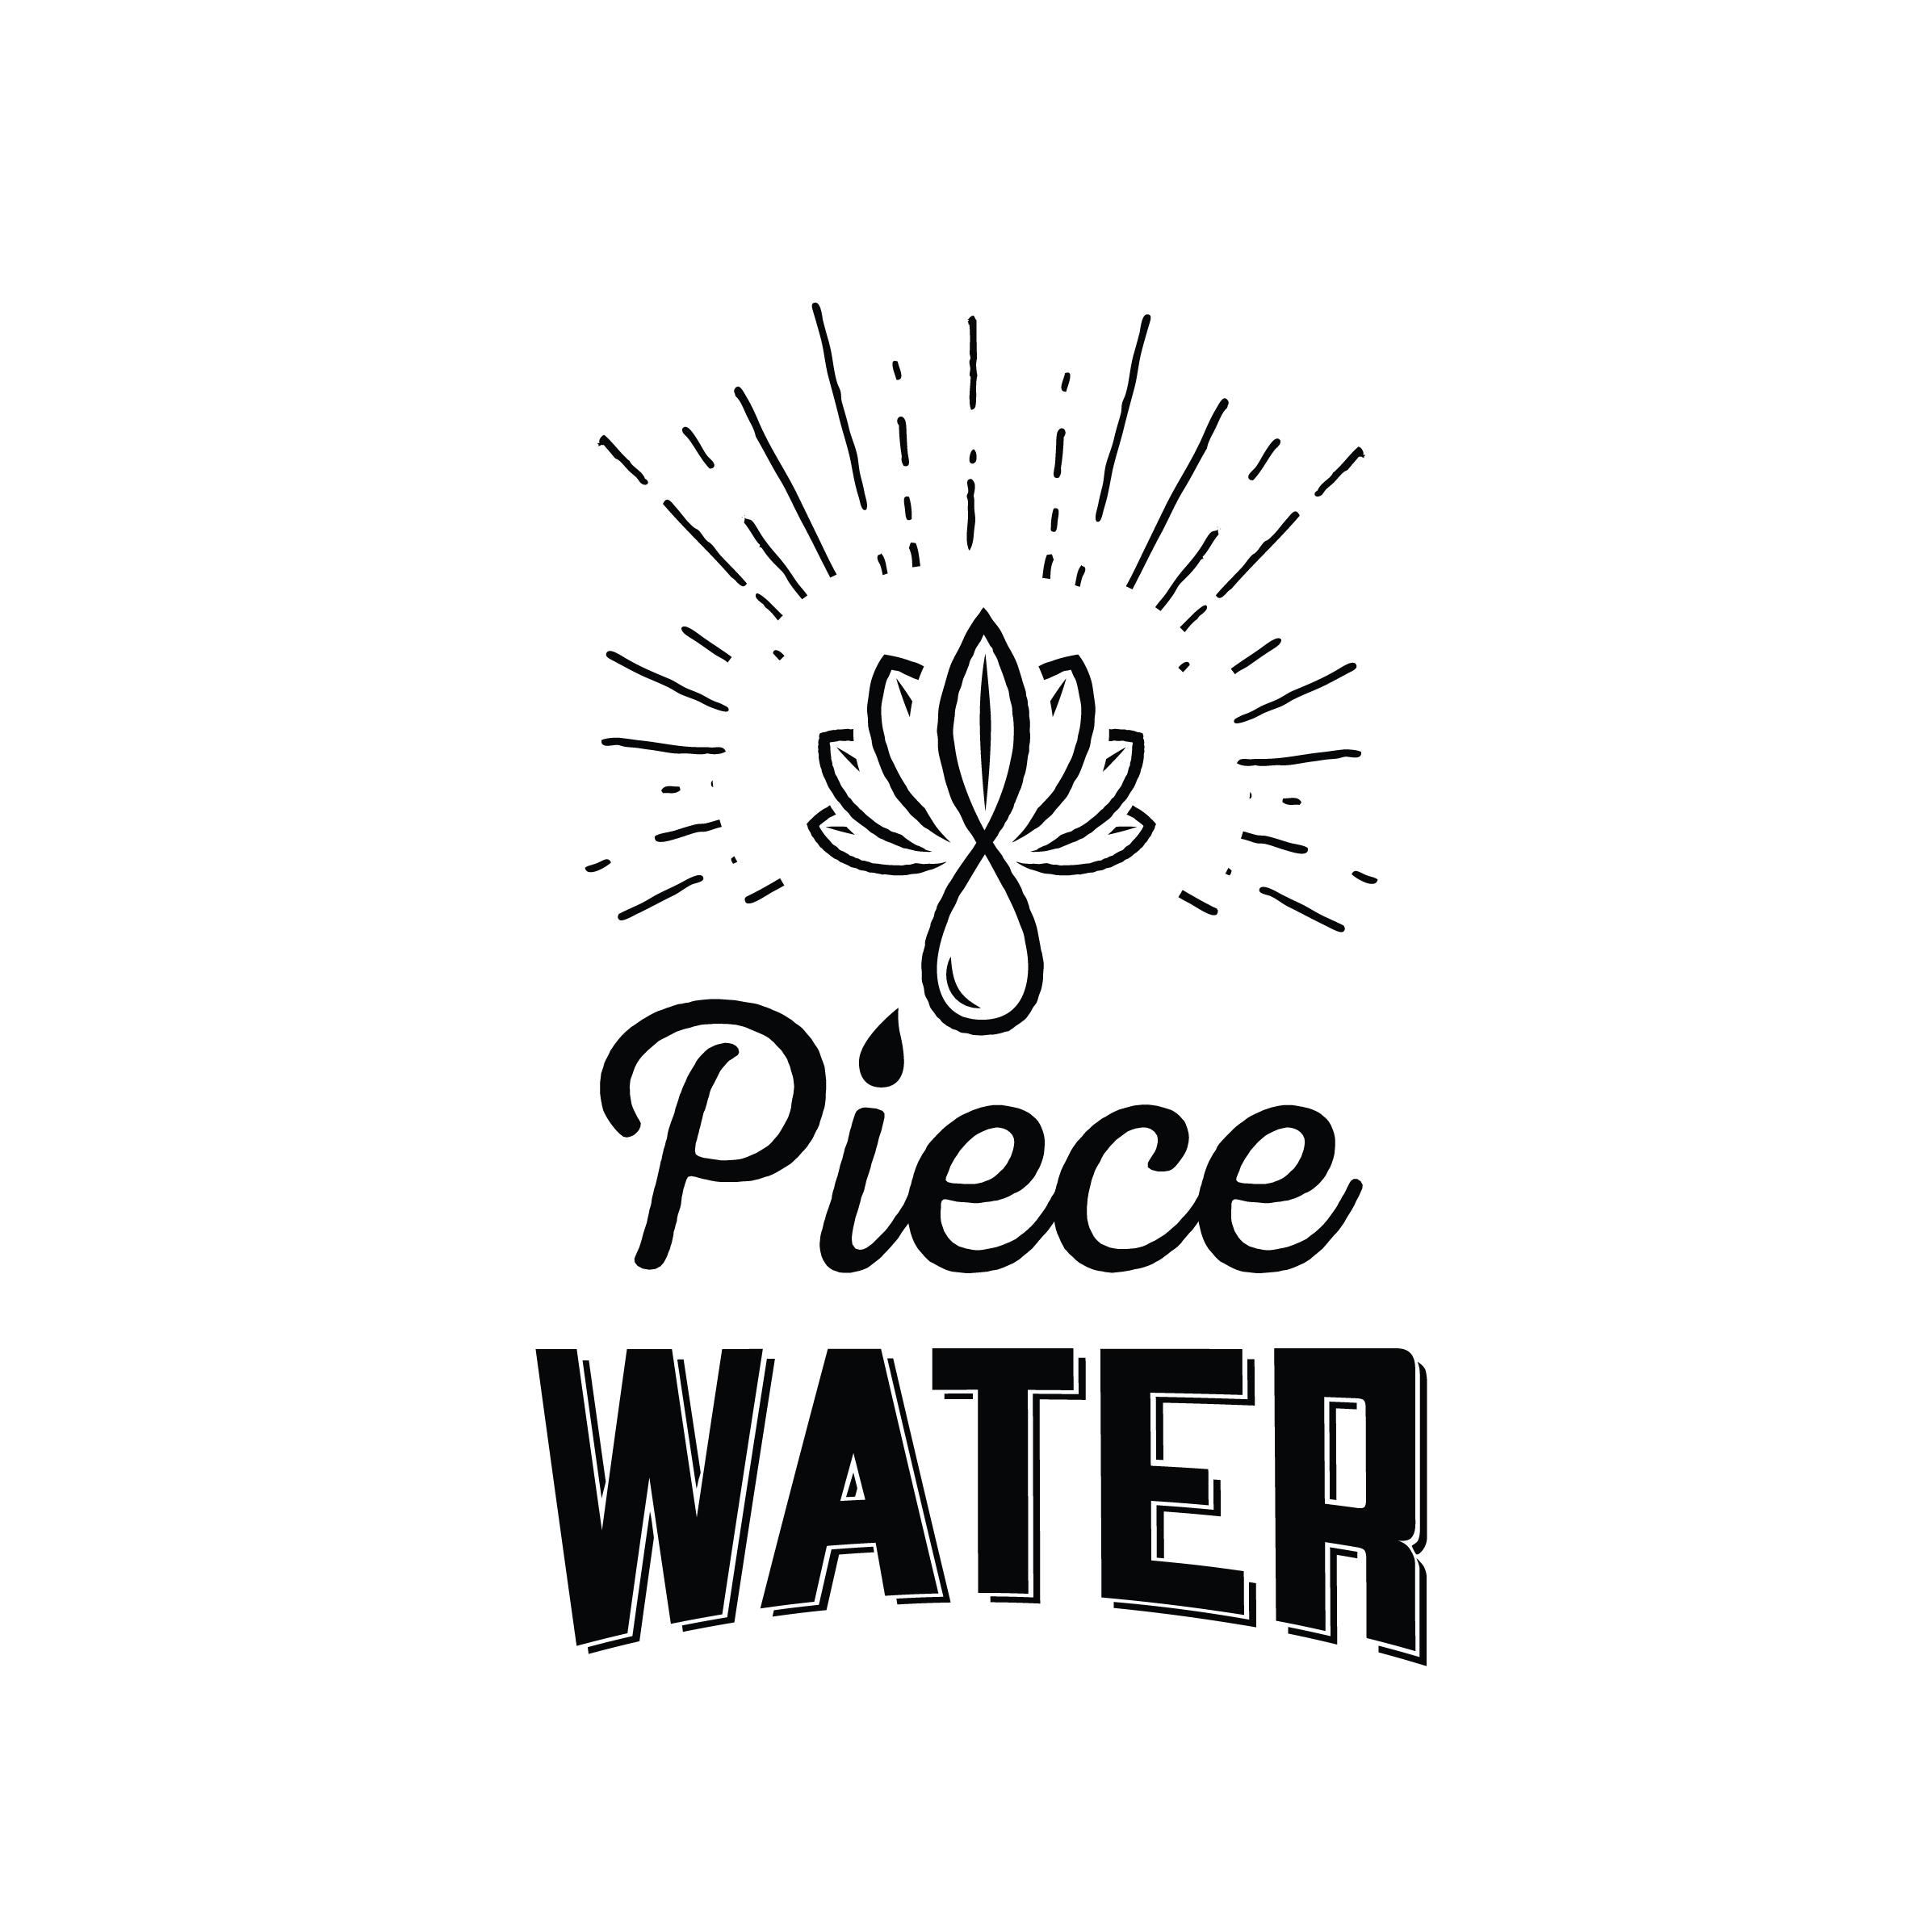 Piece Water